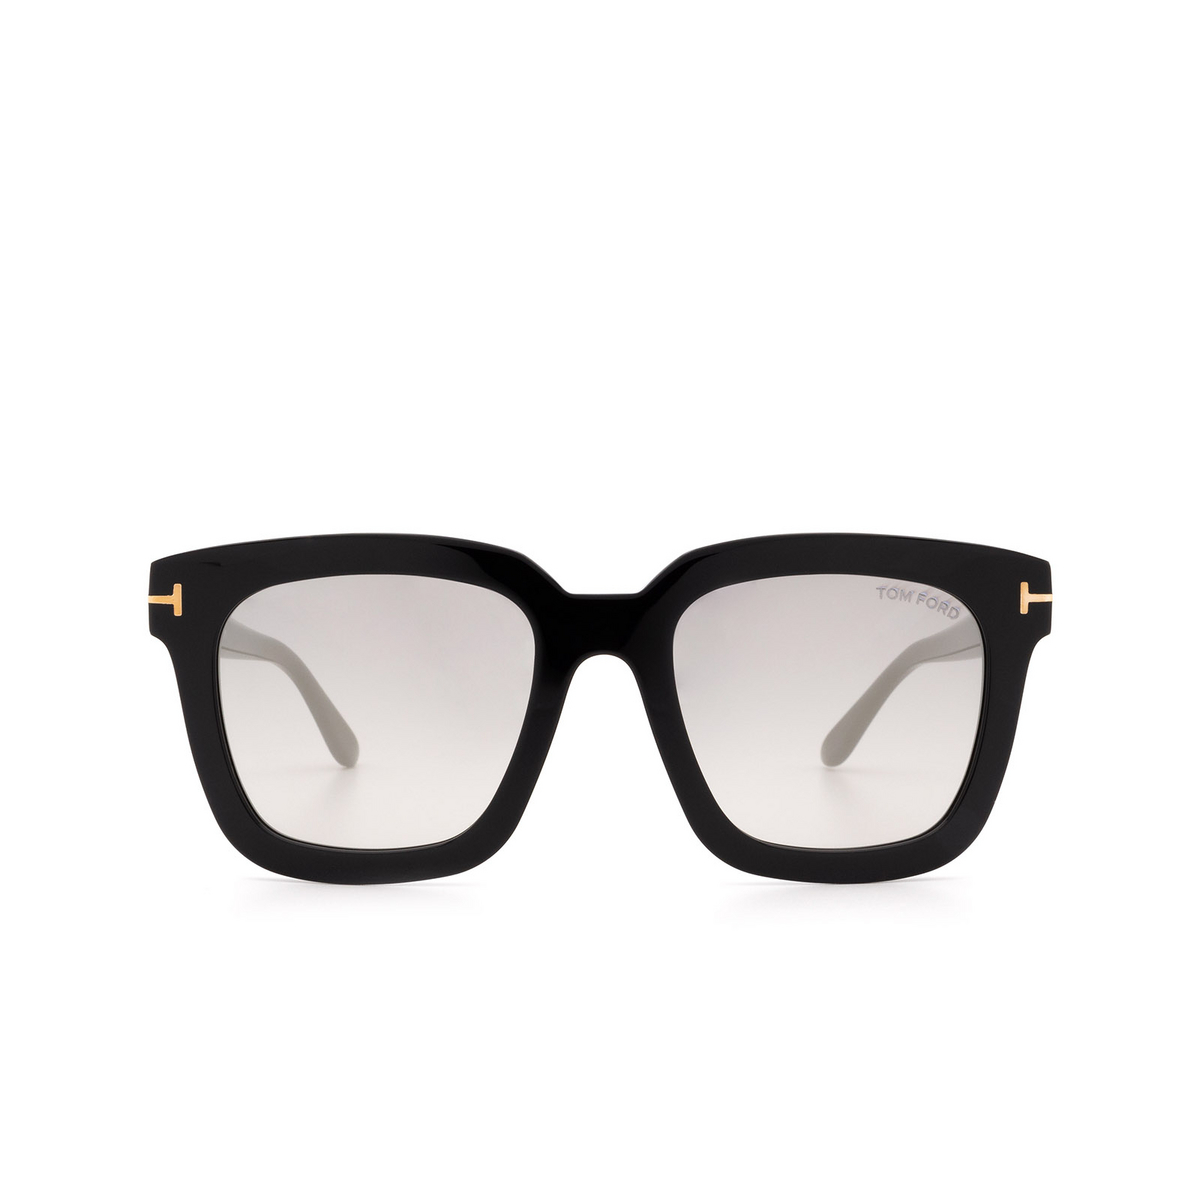 Tom Ford SARI Sunglasses 01C Shiny Black - front view